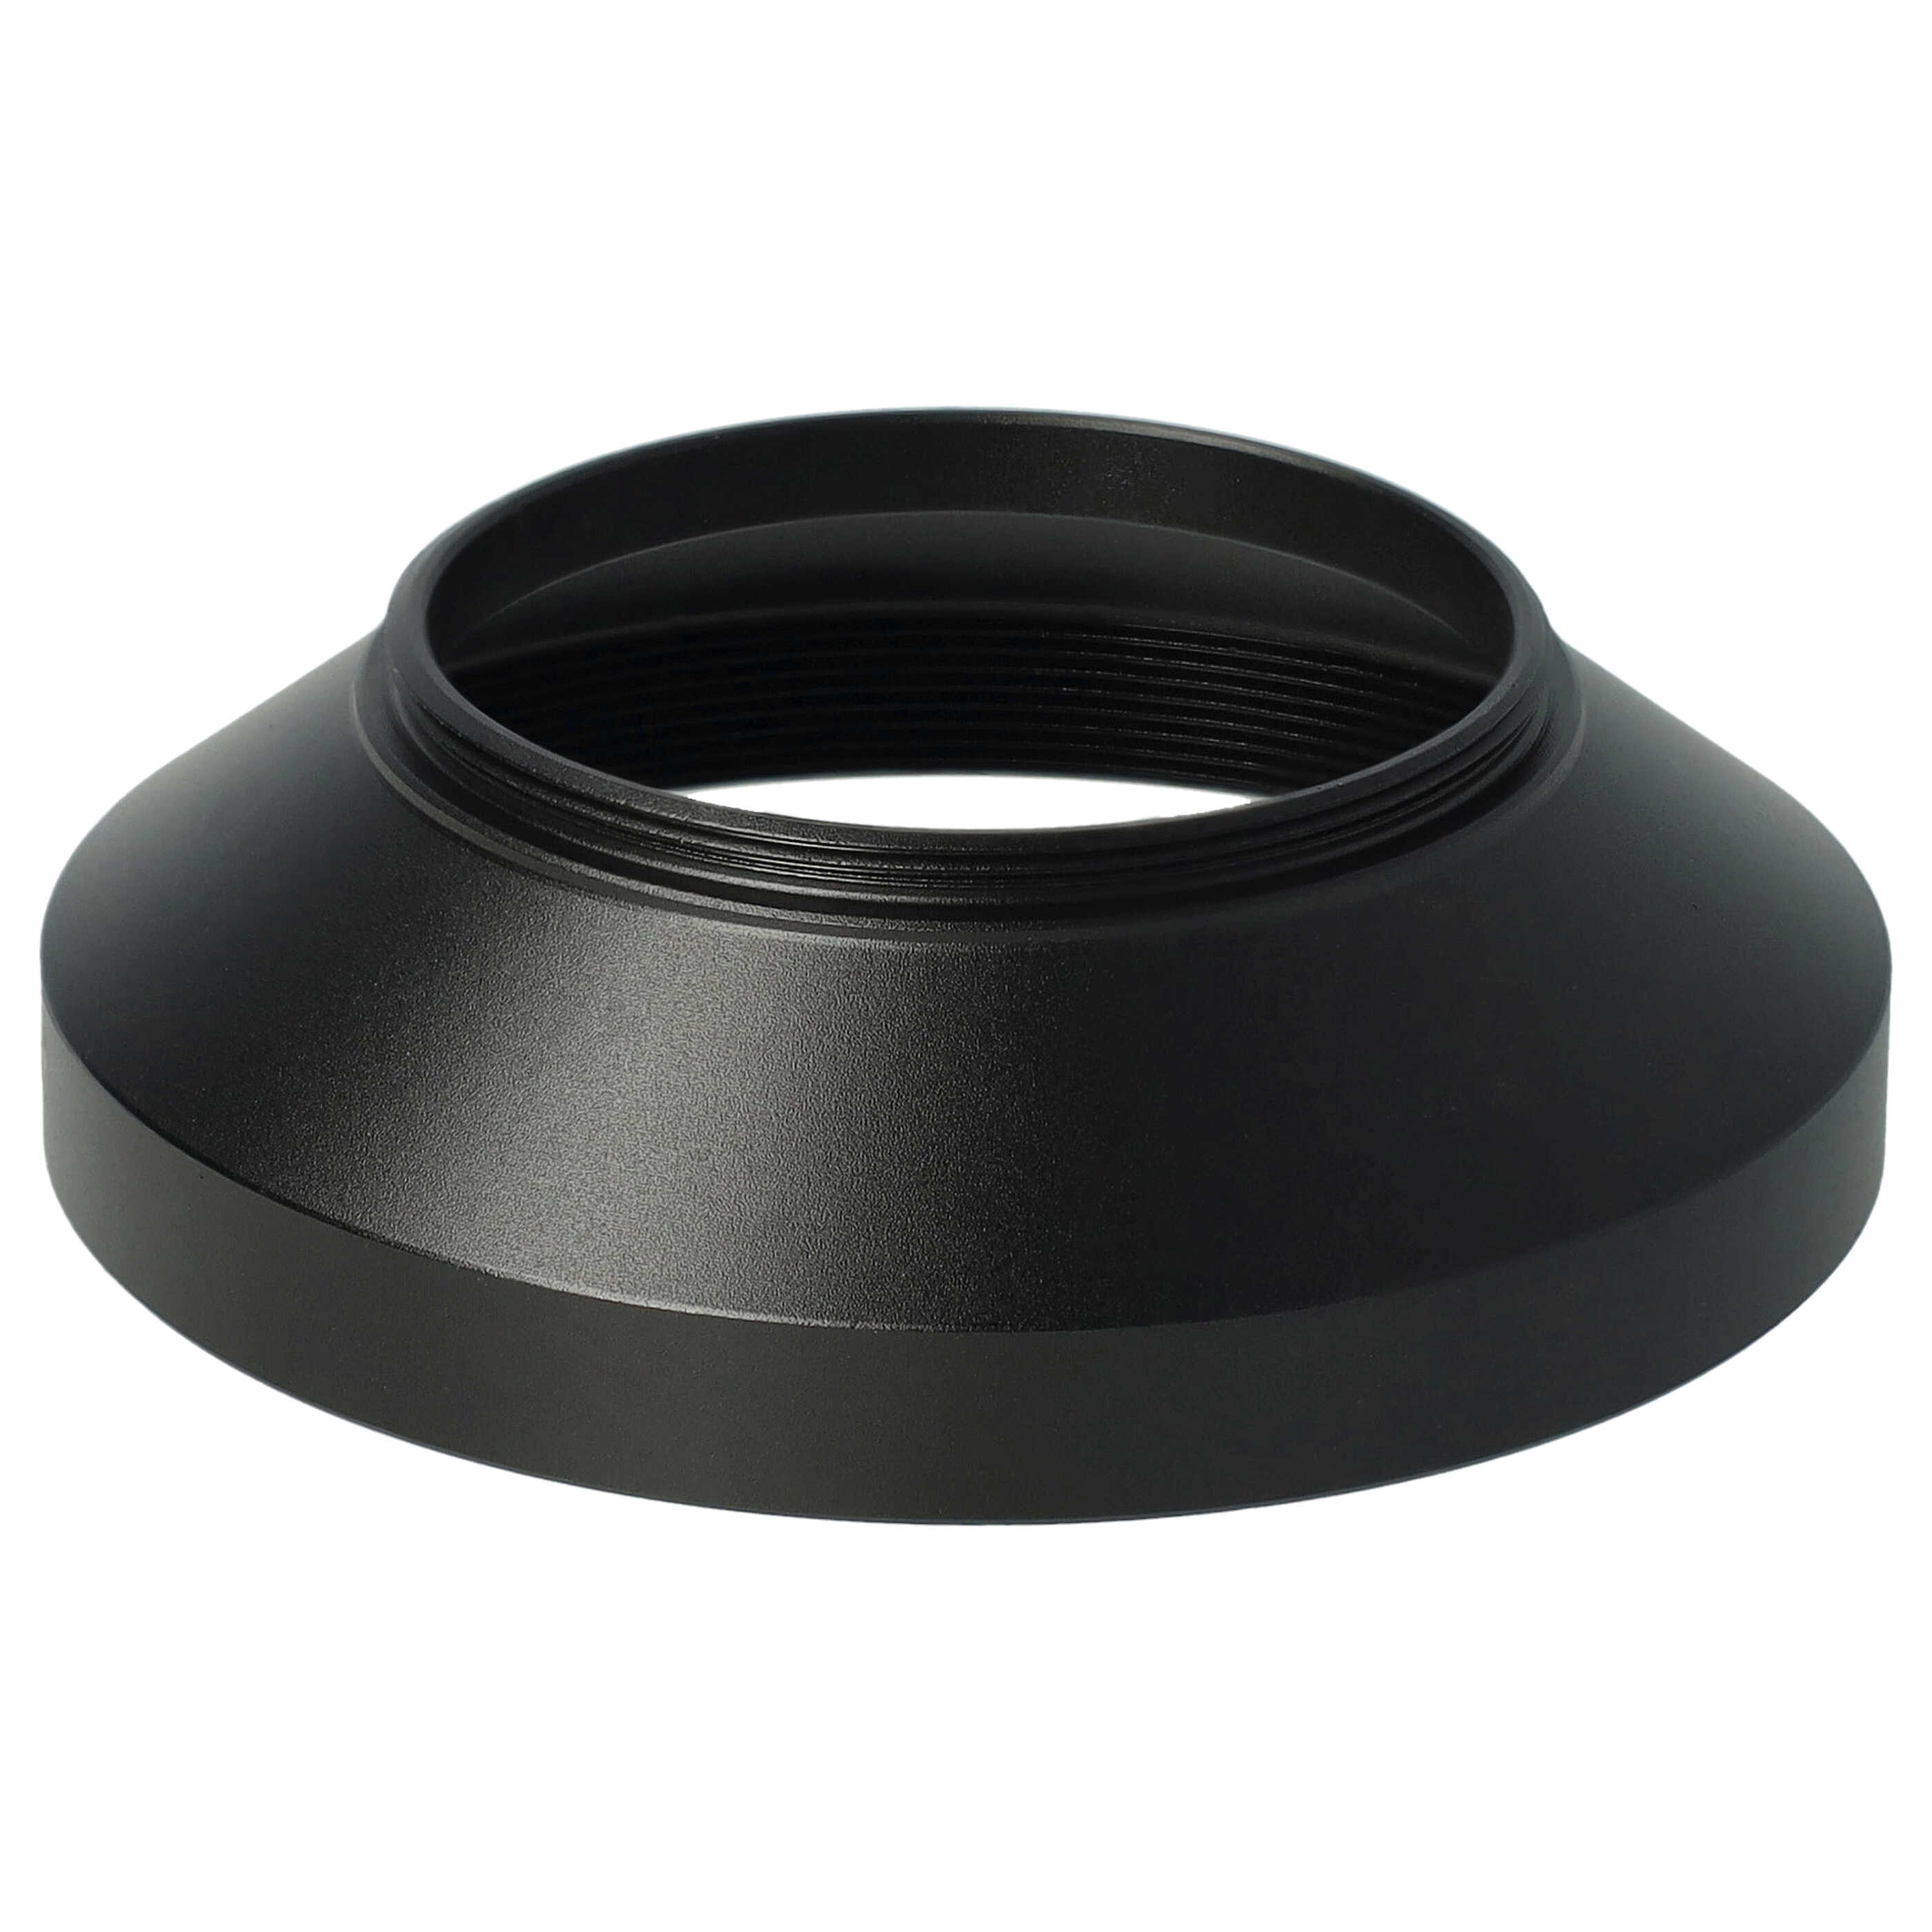 Lens Hood suitable for 40.5mm Lens - Lens Shade Black, Round